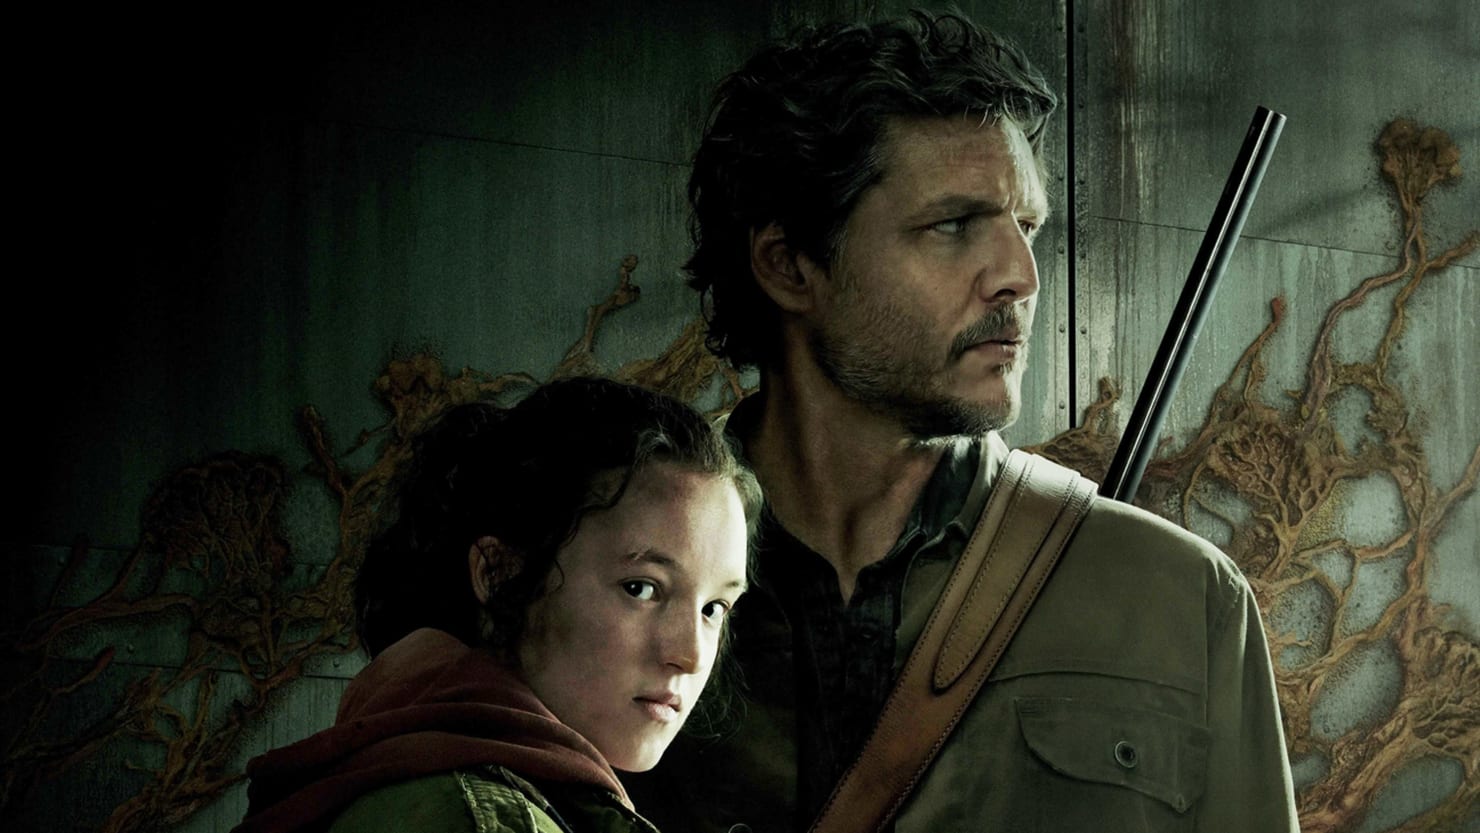 Neil Druckmann and Craig Mazin Discuss 'The Last of Us' Episode 3